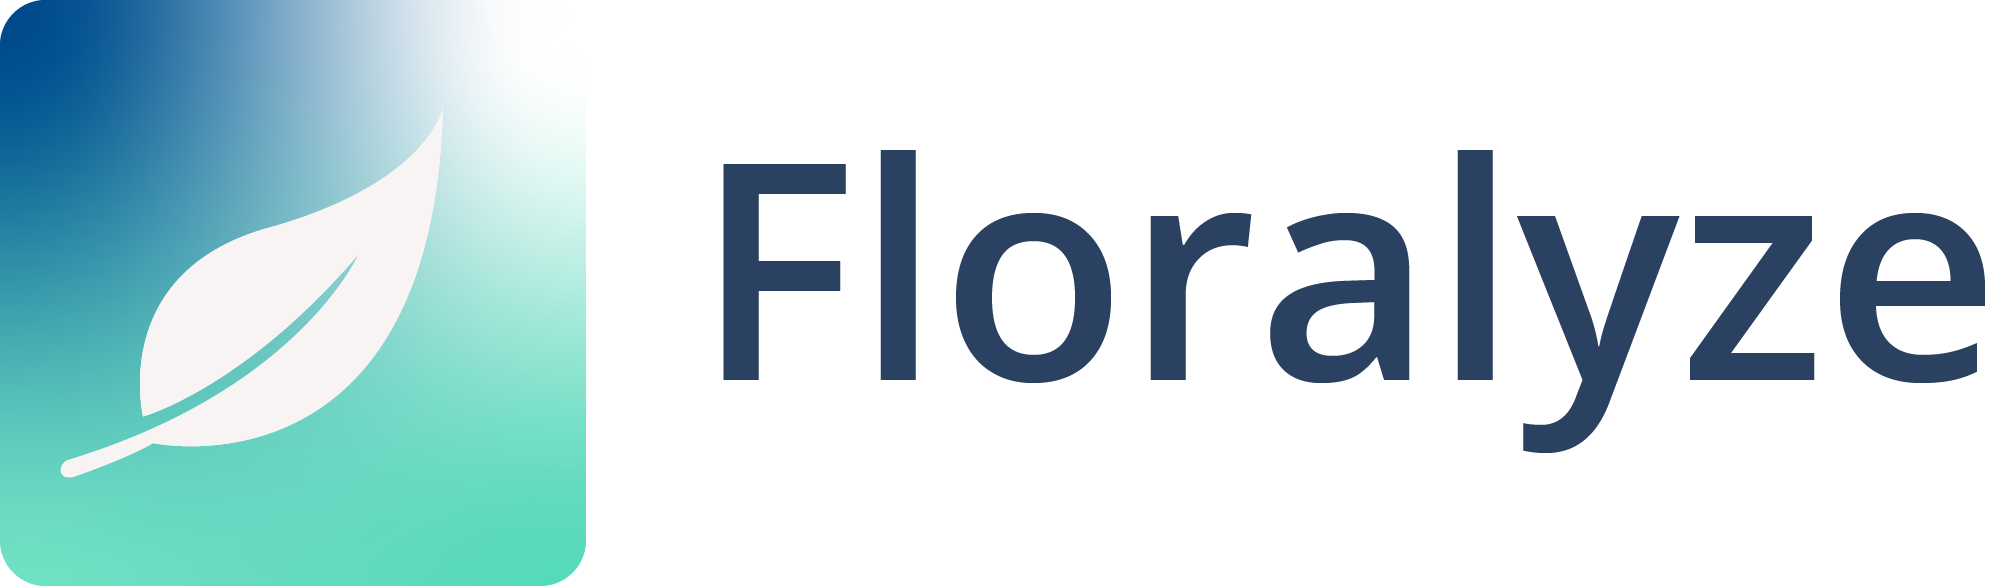 Floralyze logo